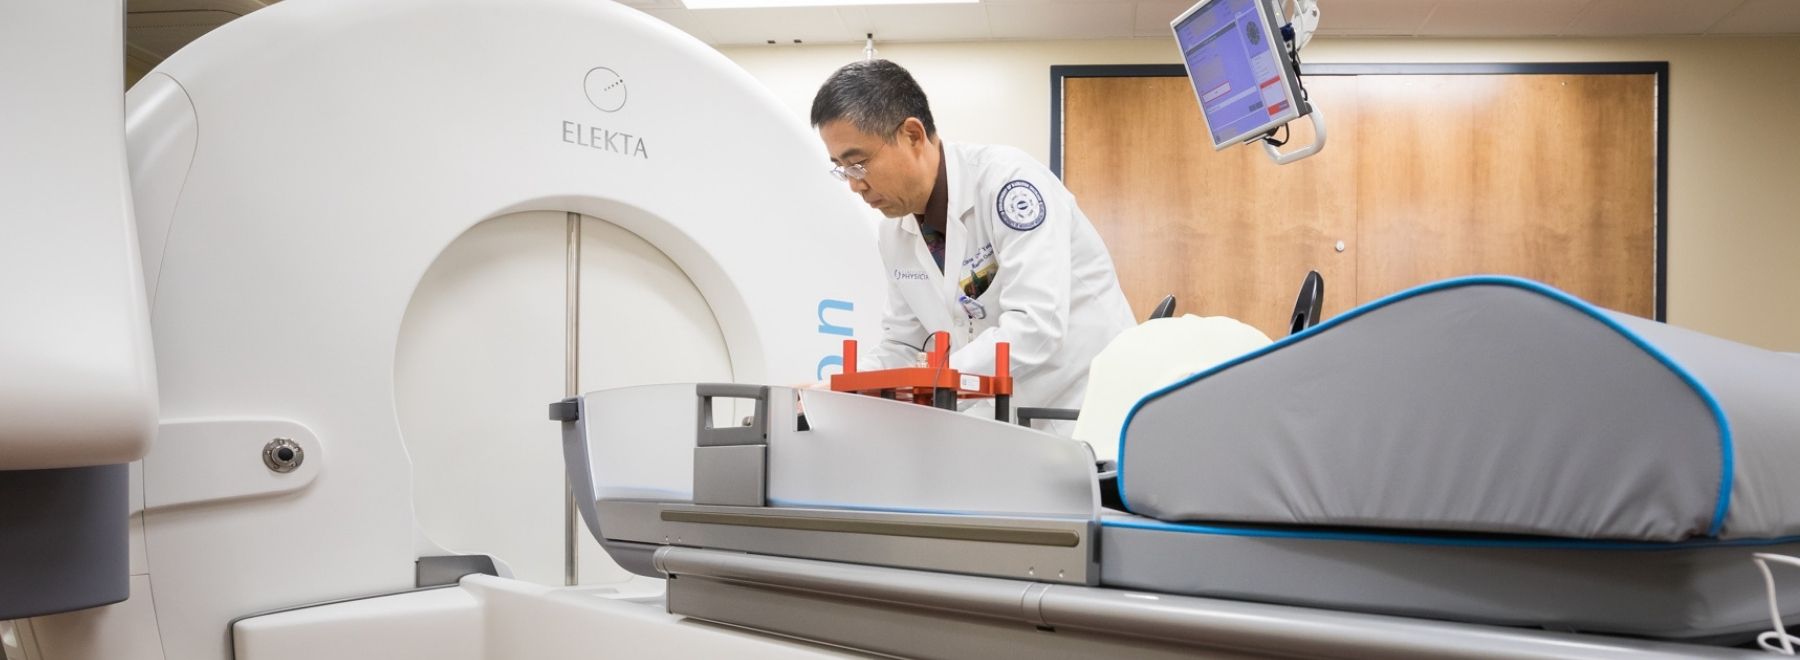 A physician examines aspects of Gamma Knife (R) radiosurgery equipment.